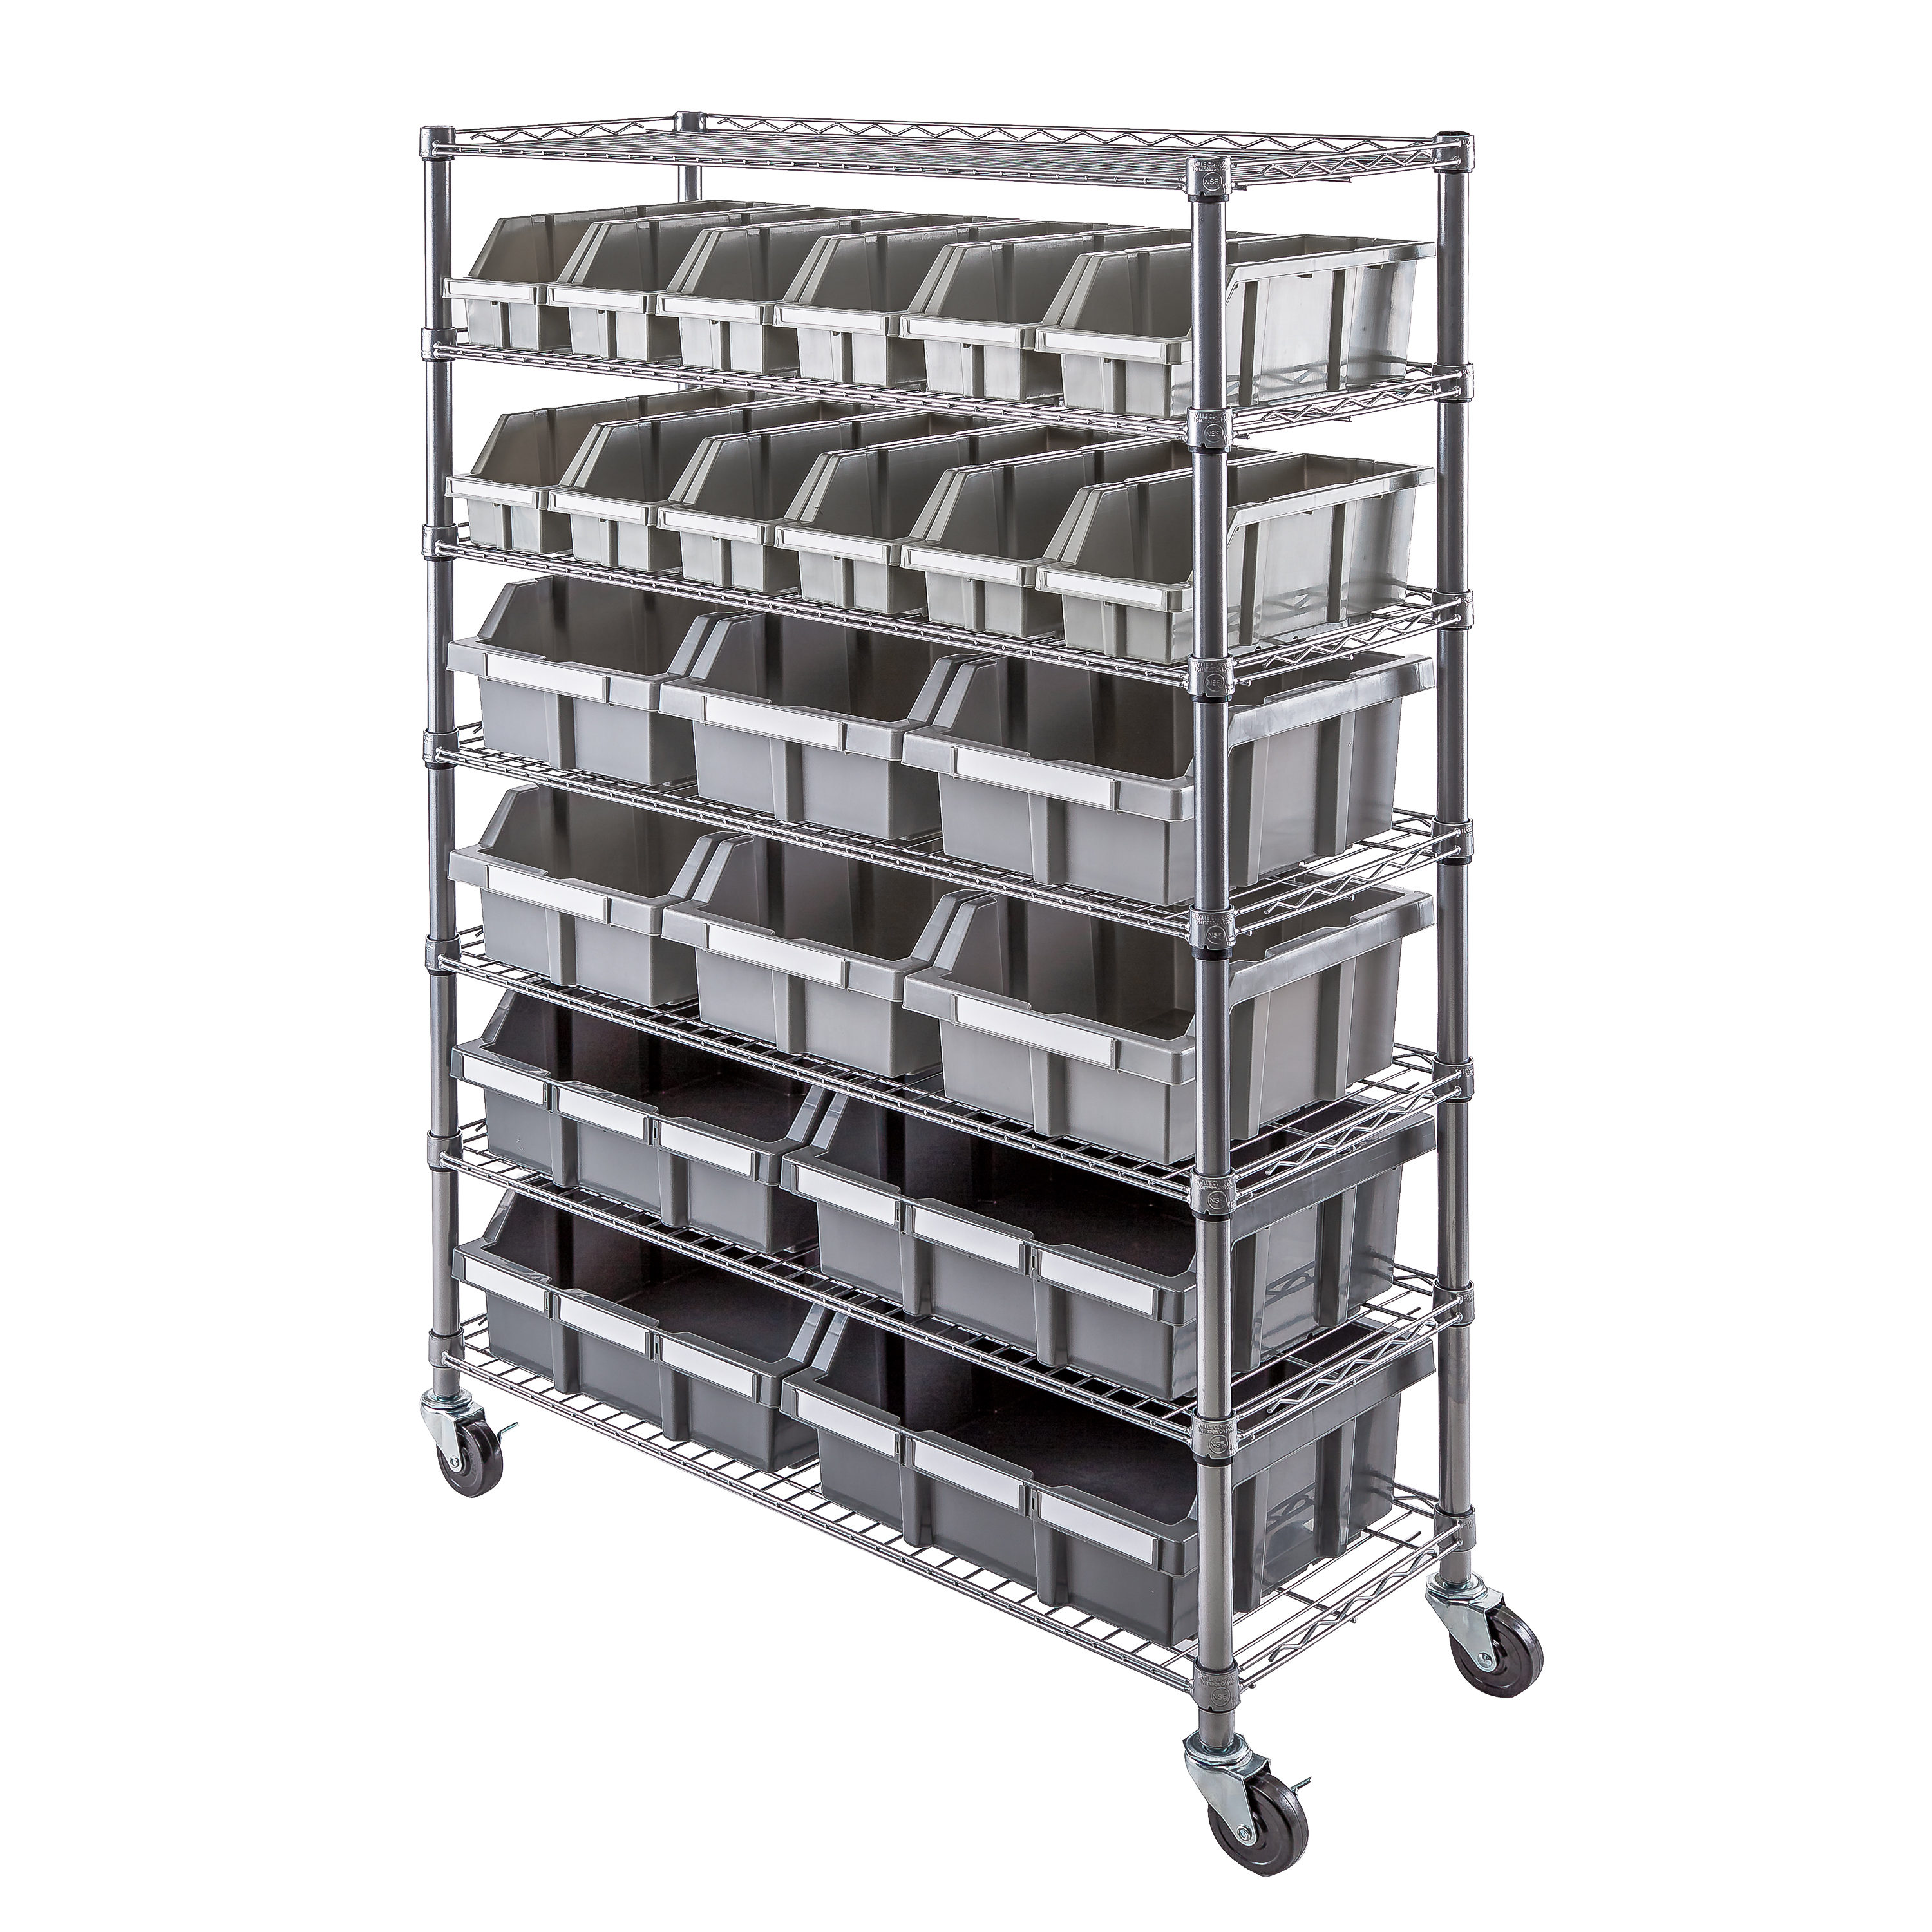 SafeRacks Bin Rack Combo - Includes 5 Storage Bins